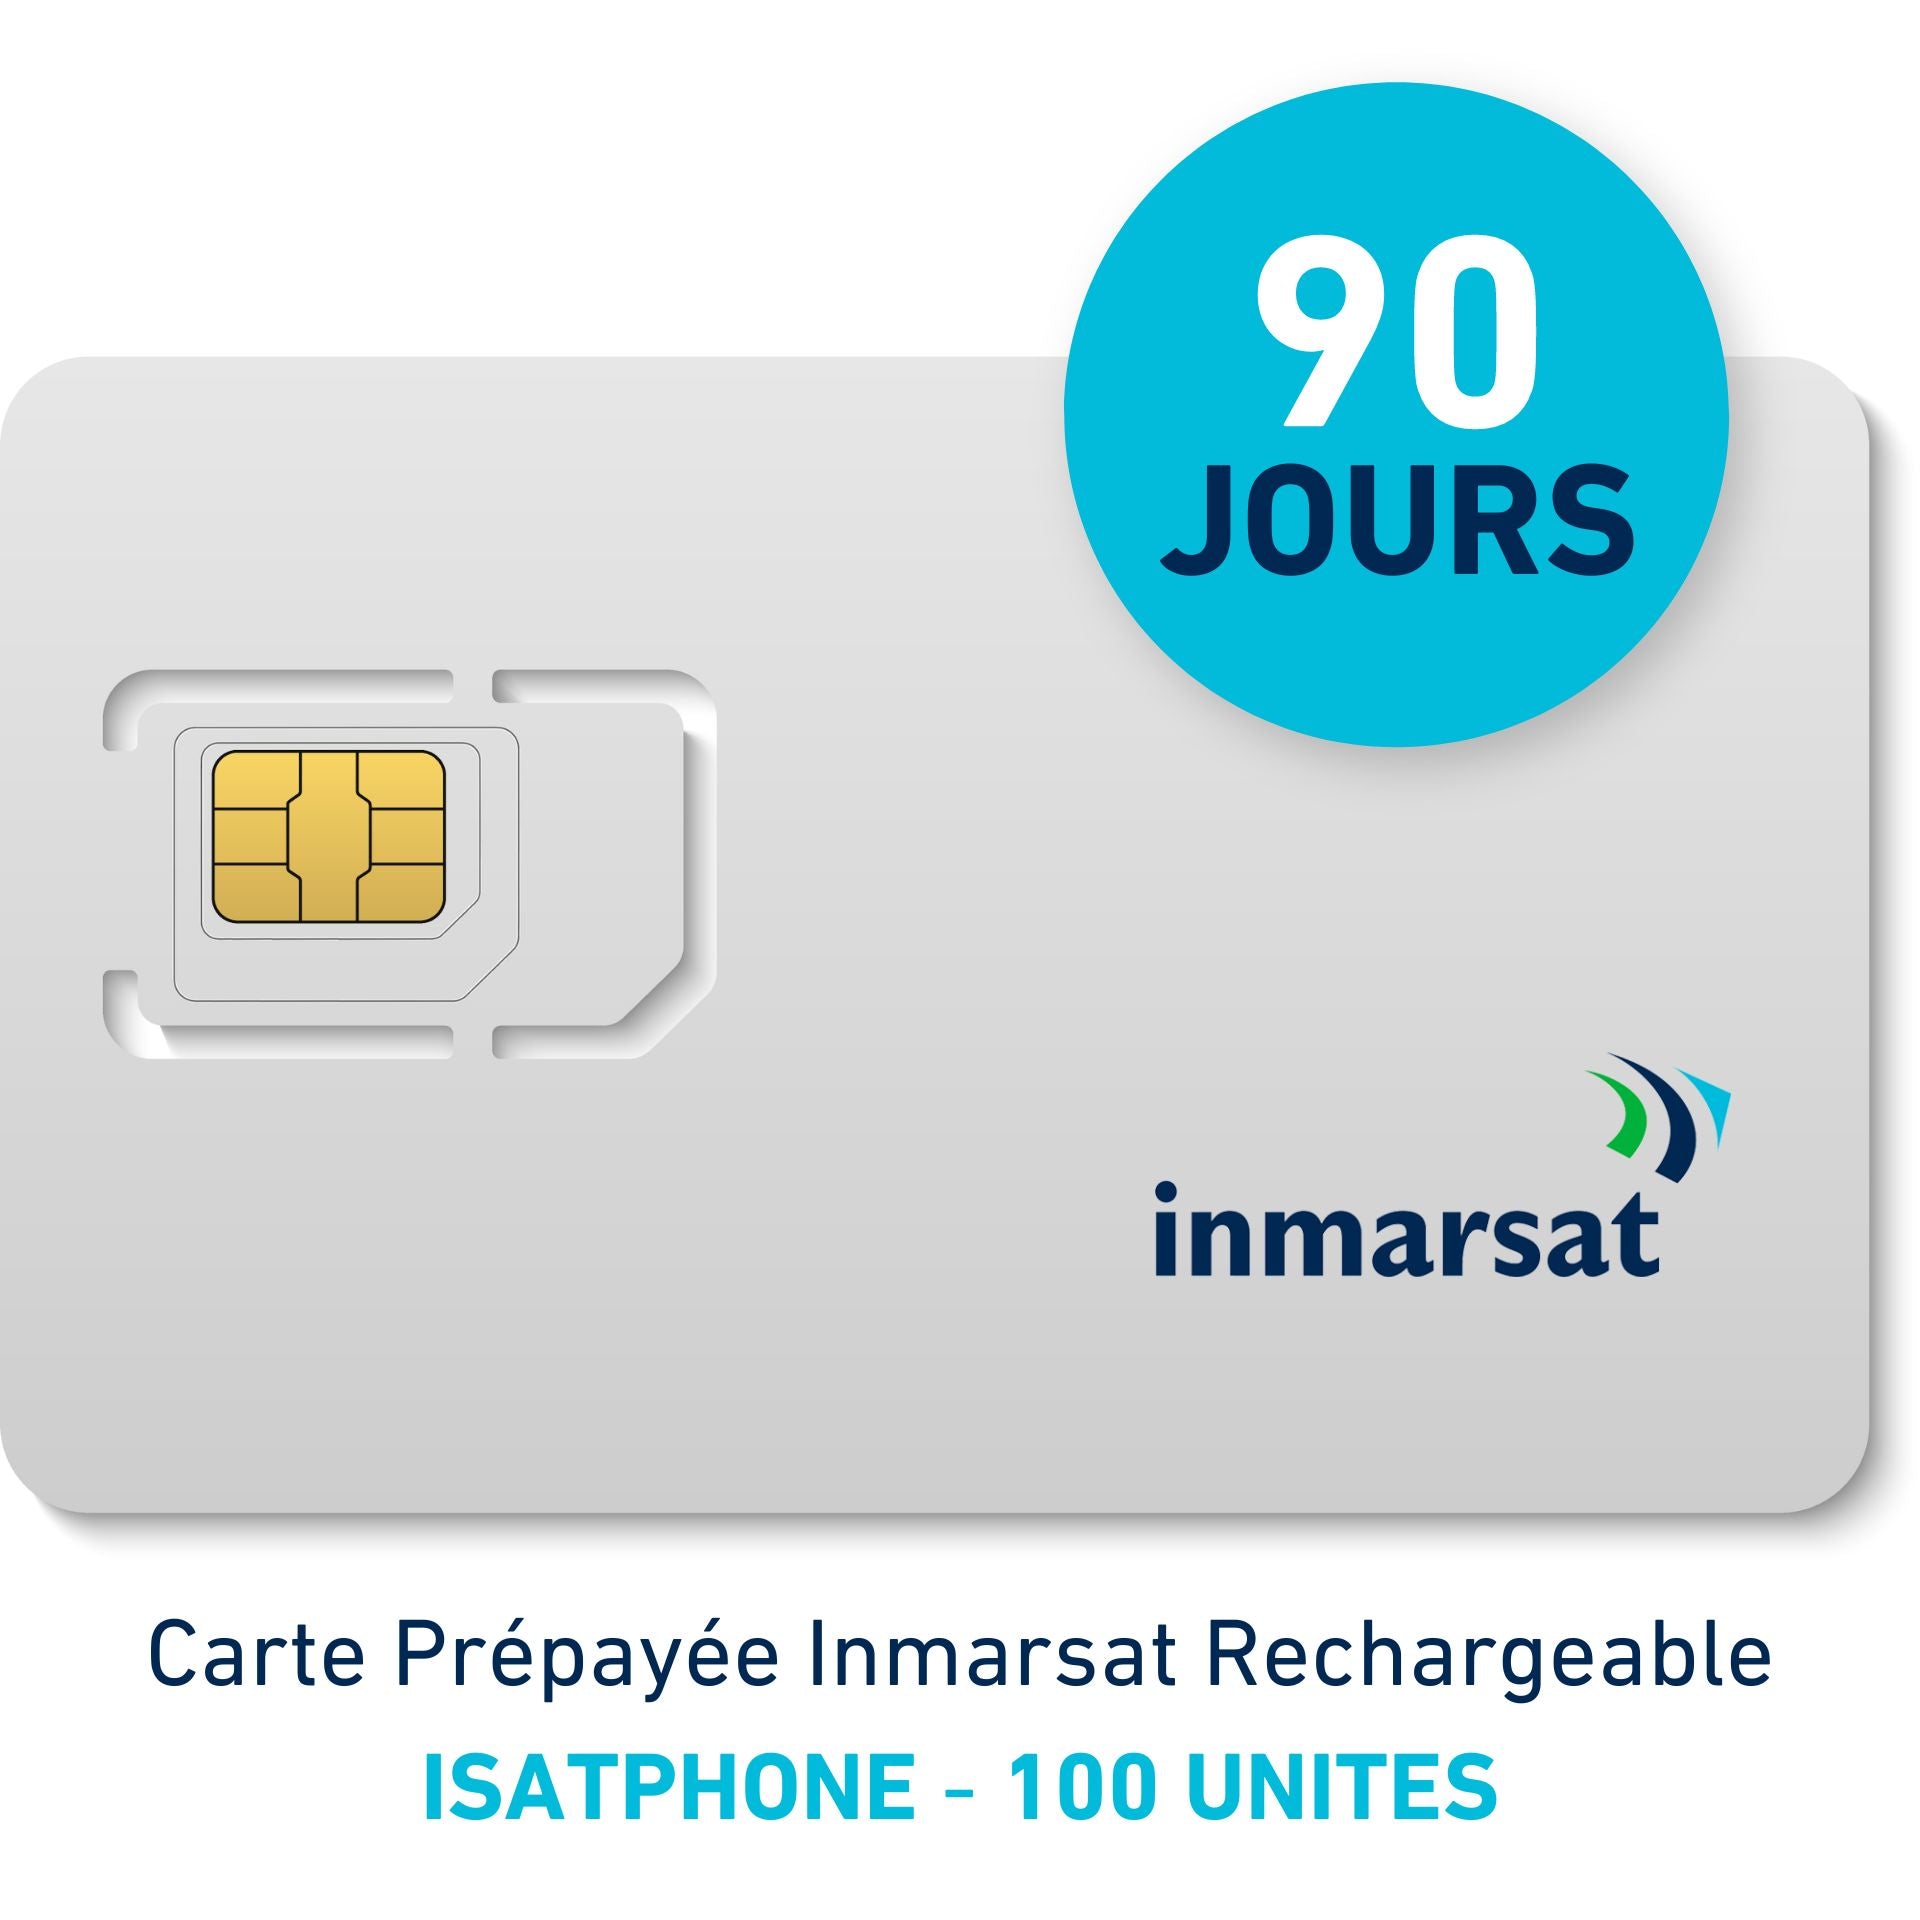 Carte Prépayée INMARSAT Rechargeable ISATPHONE - 100 UNITES - 90 jours